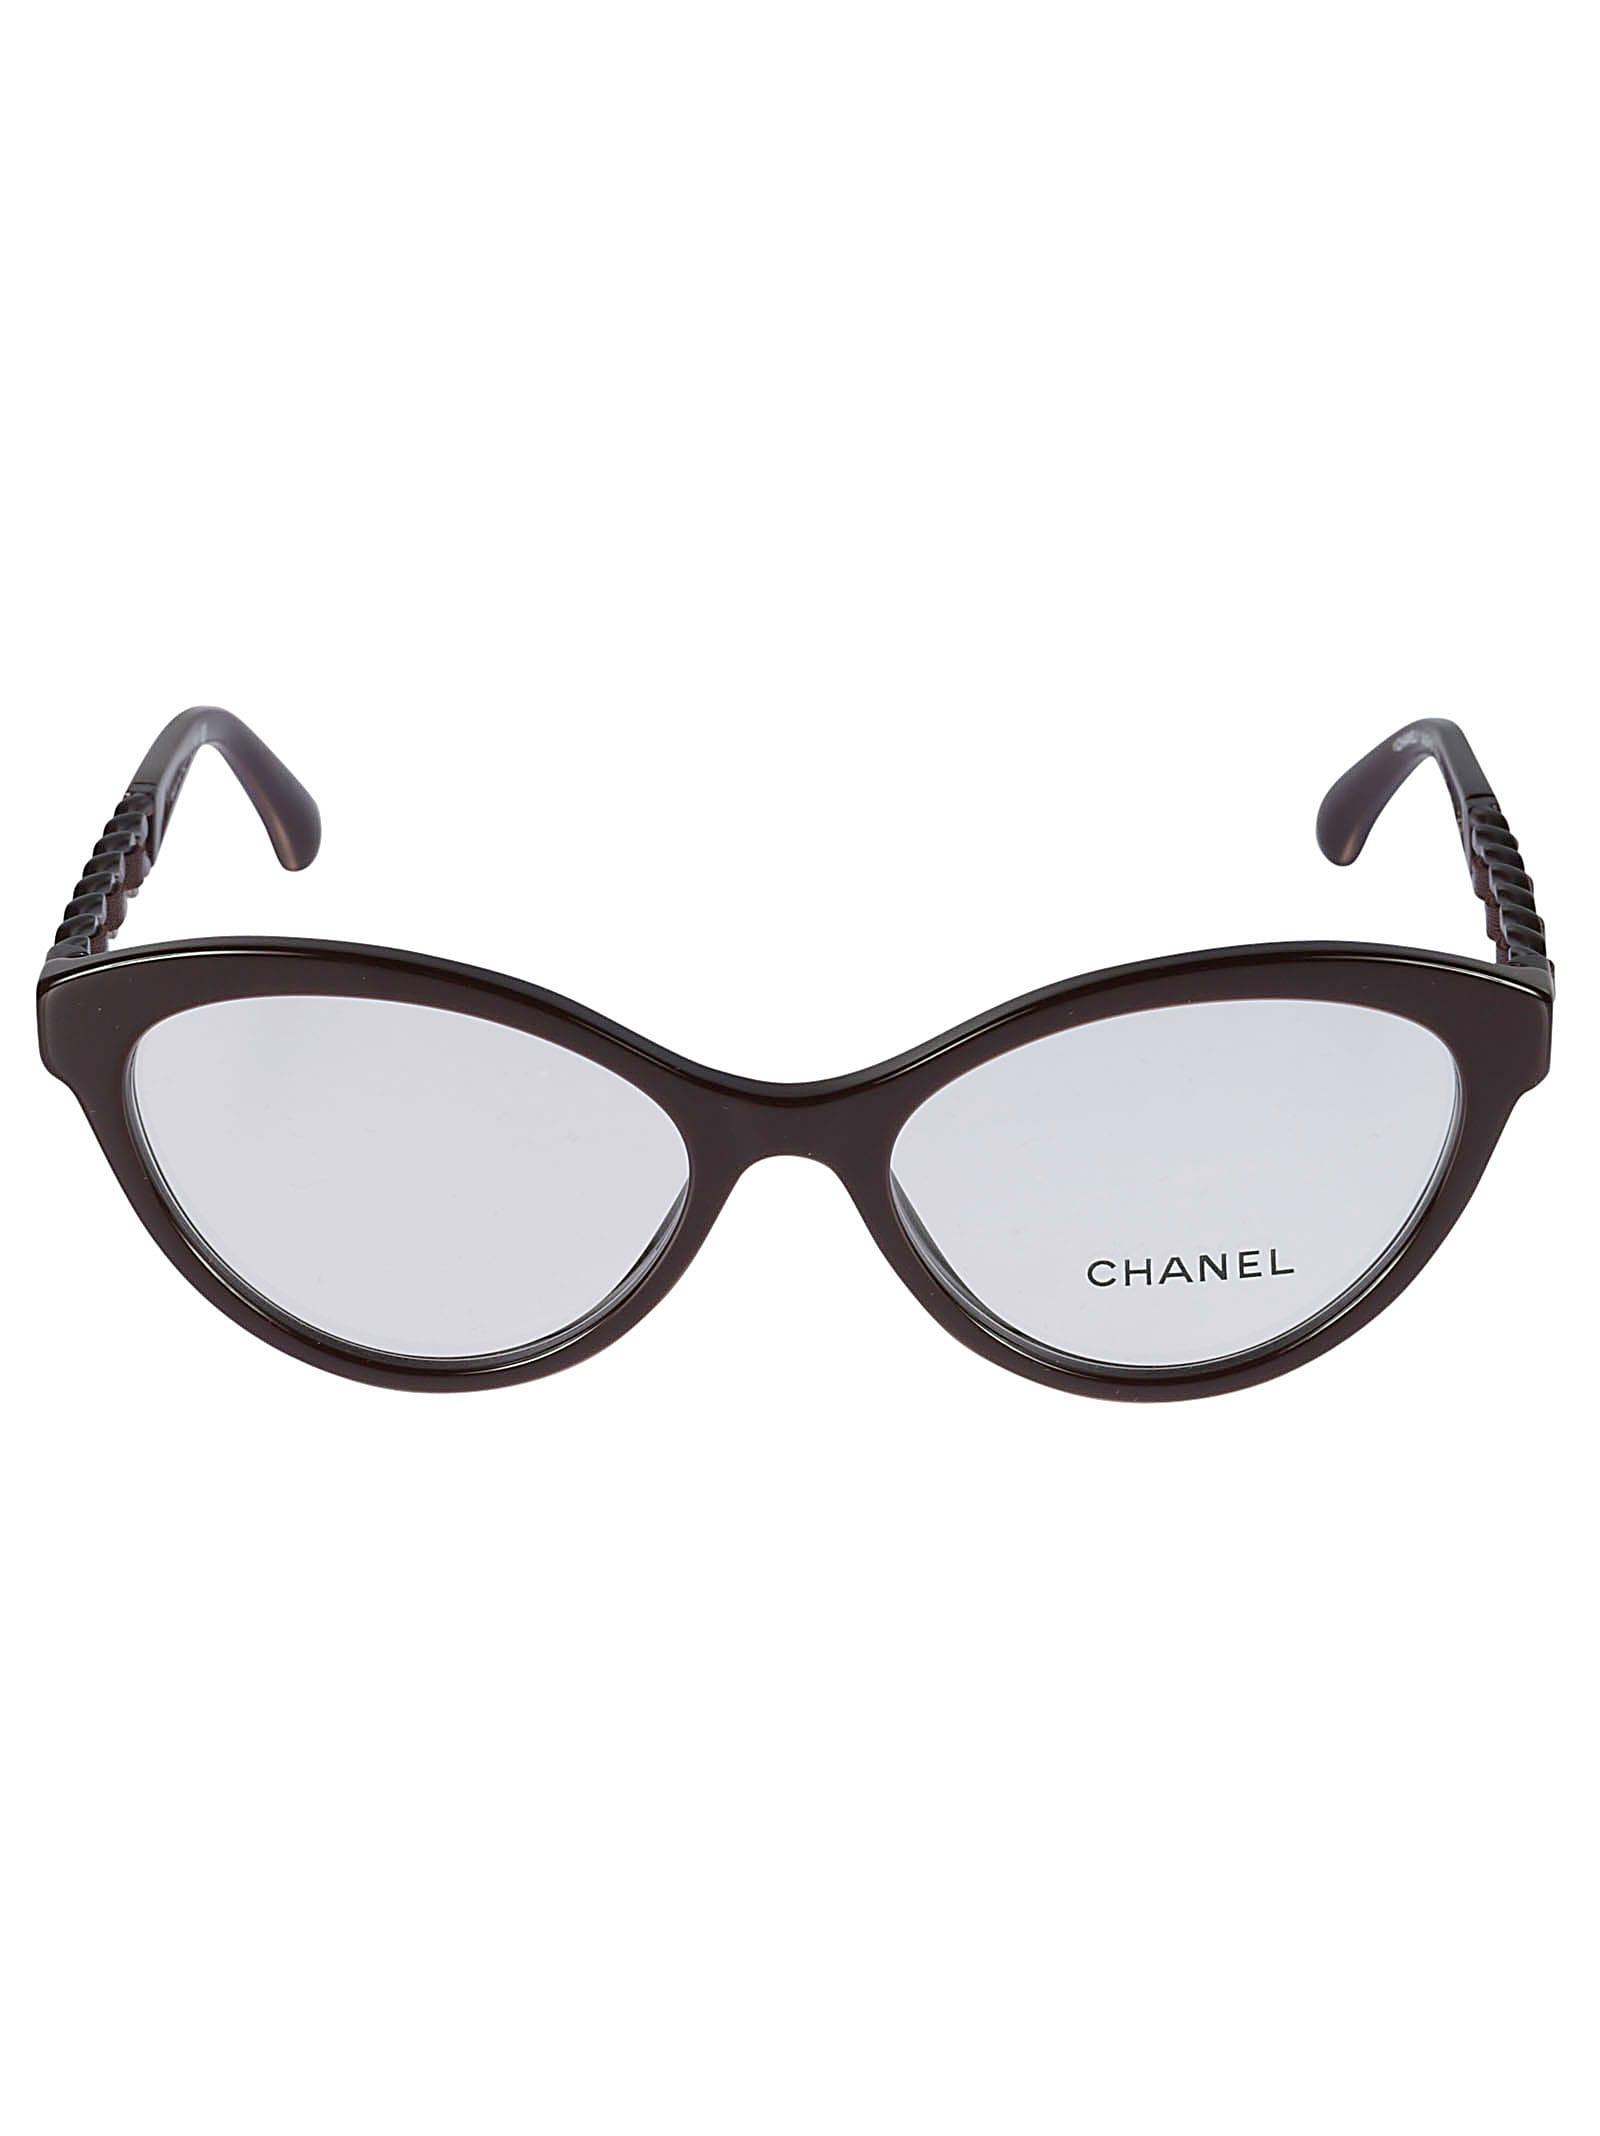 chanel black eyeglasses